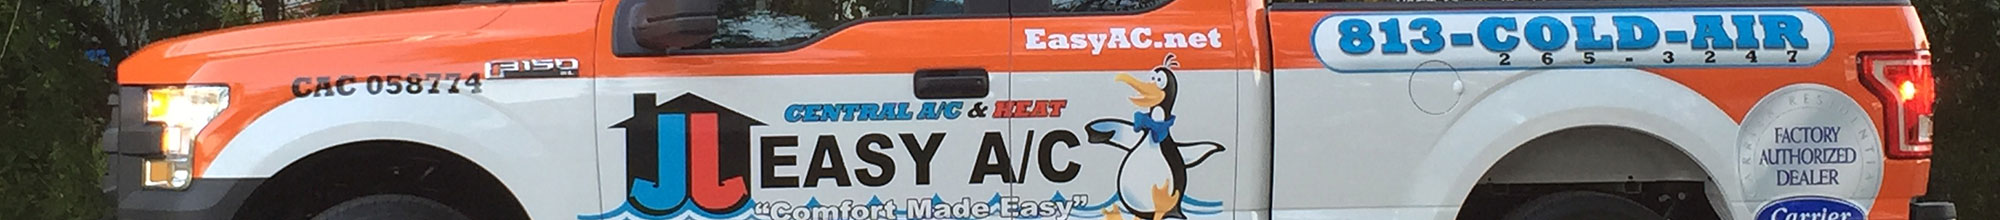 Why Easy AC?